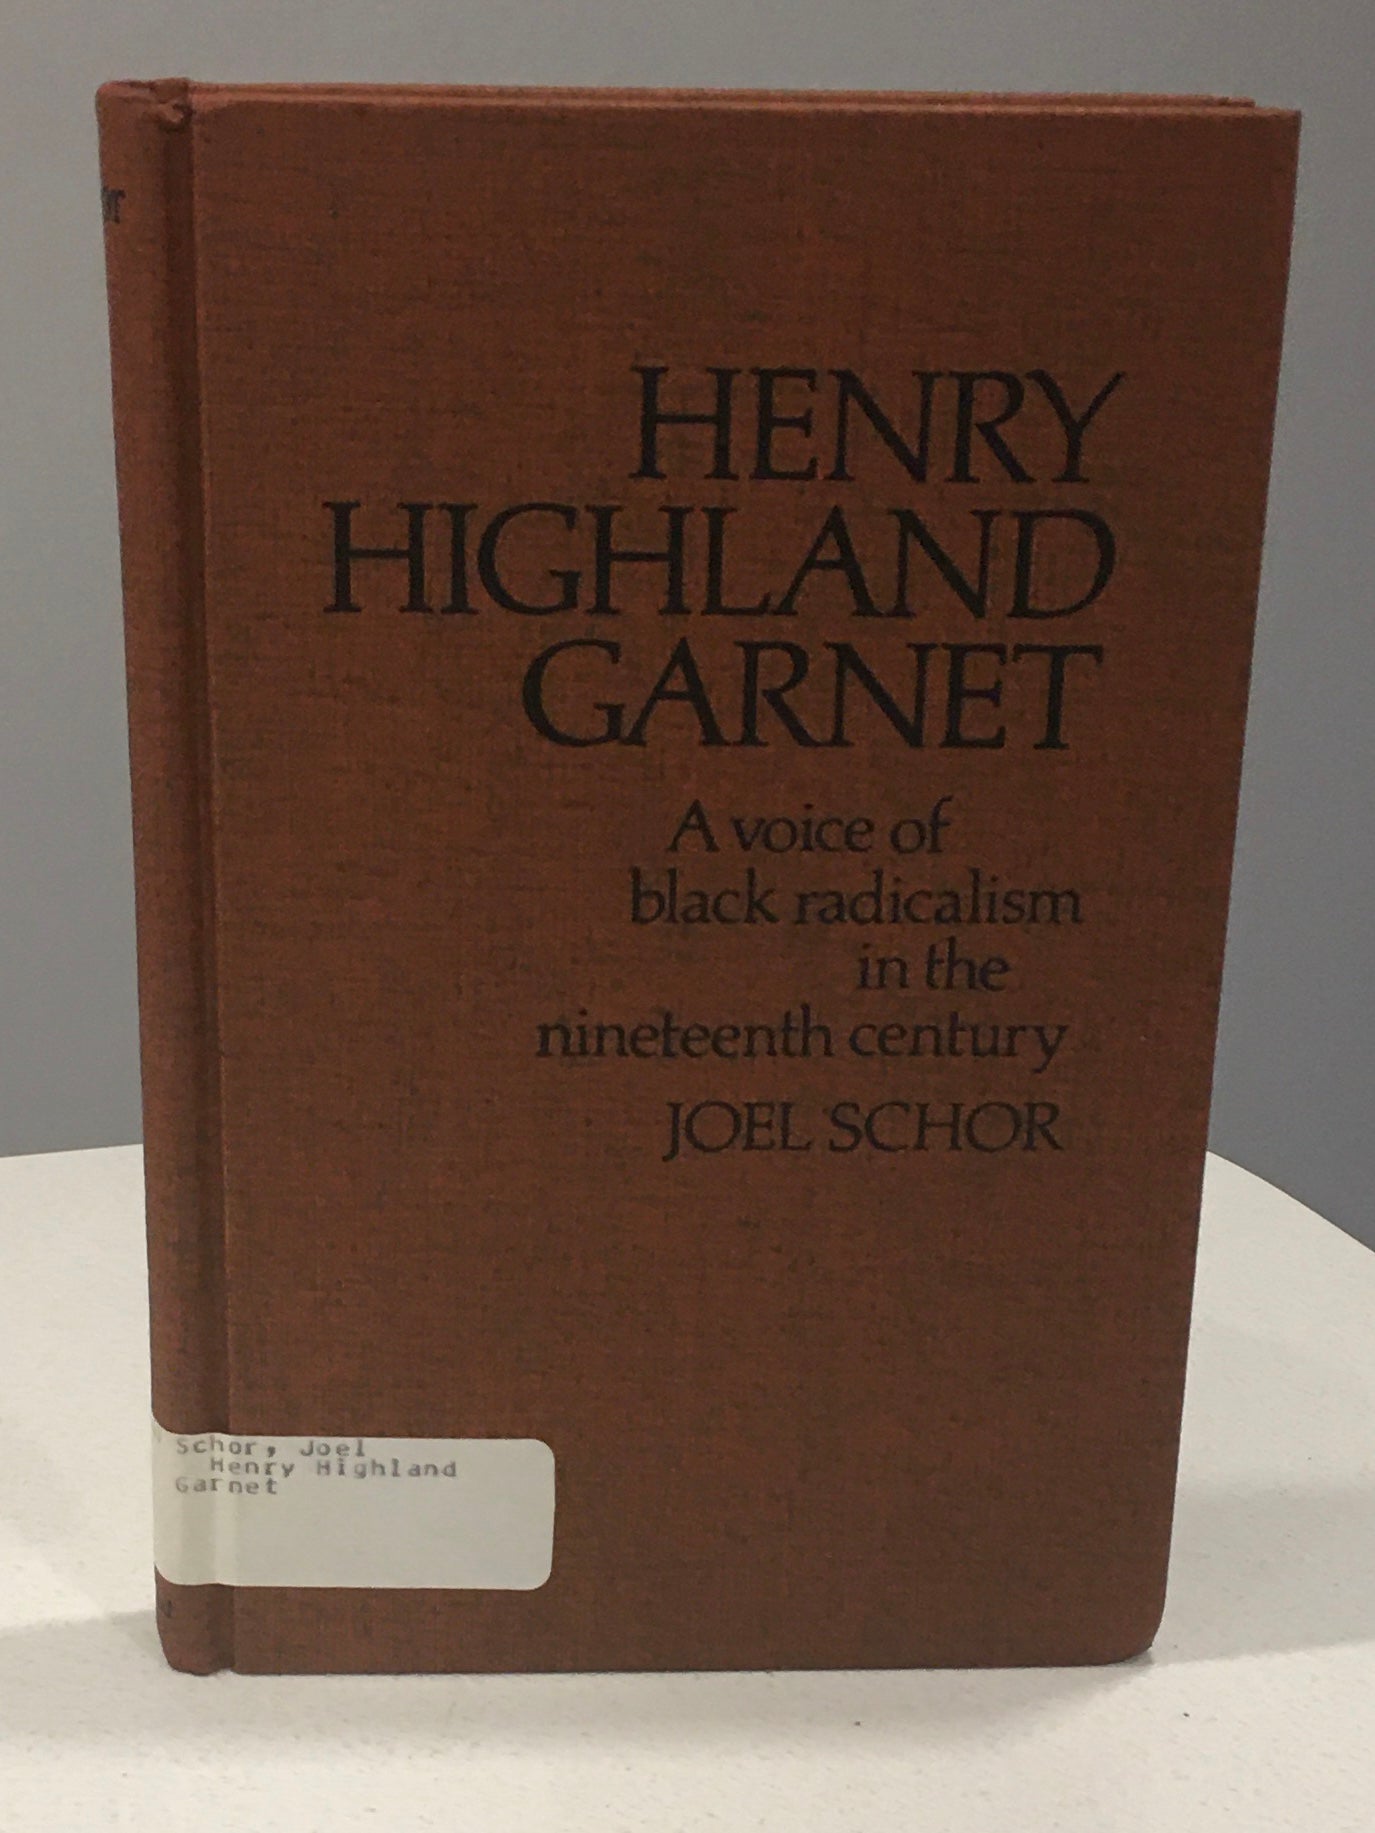 Henry Highland Garnet  A voice of black radicalism in the nineteenth century